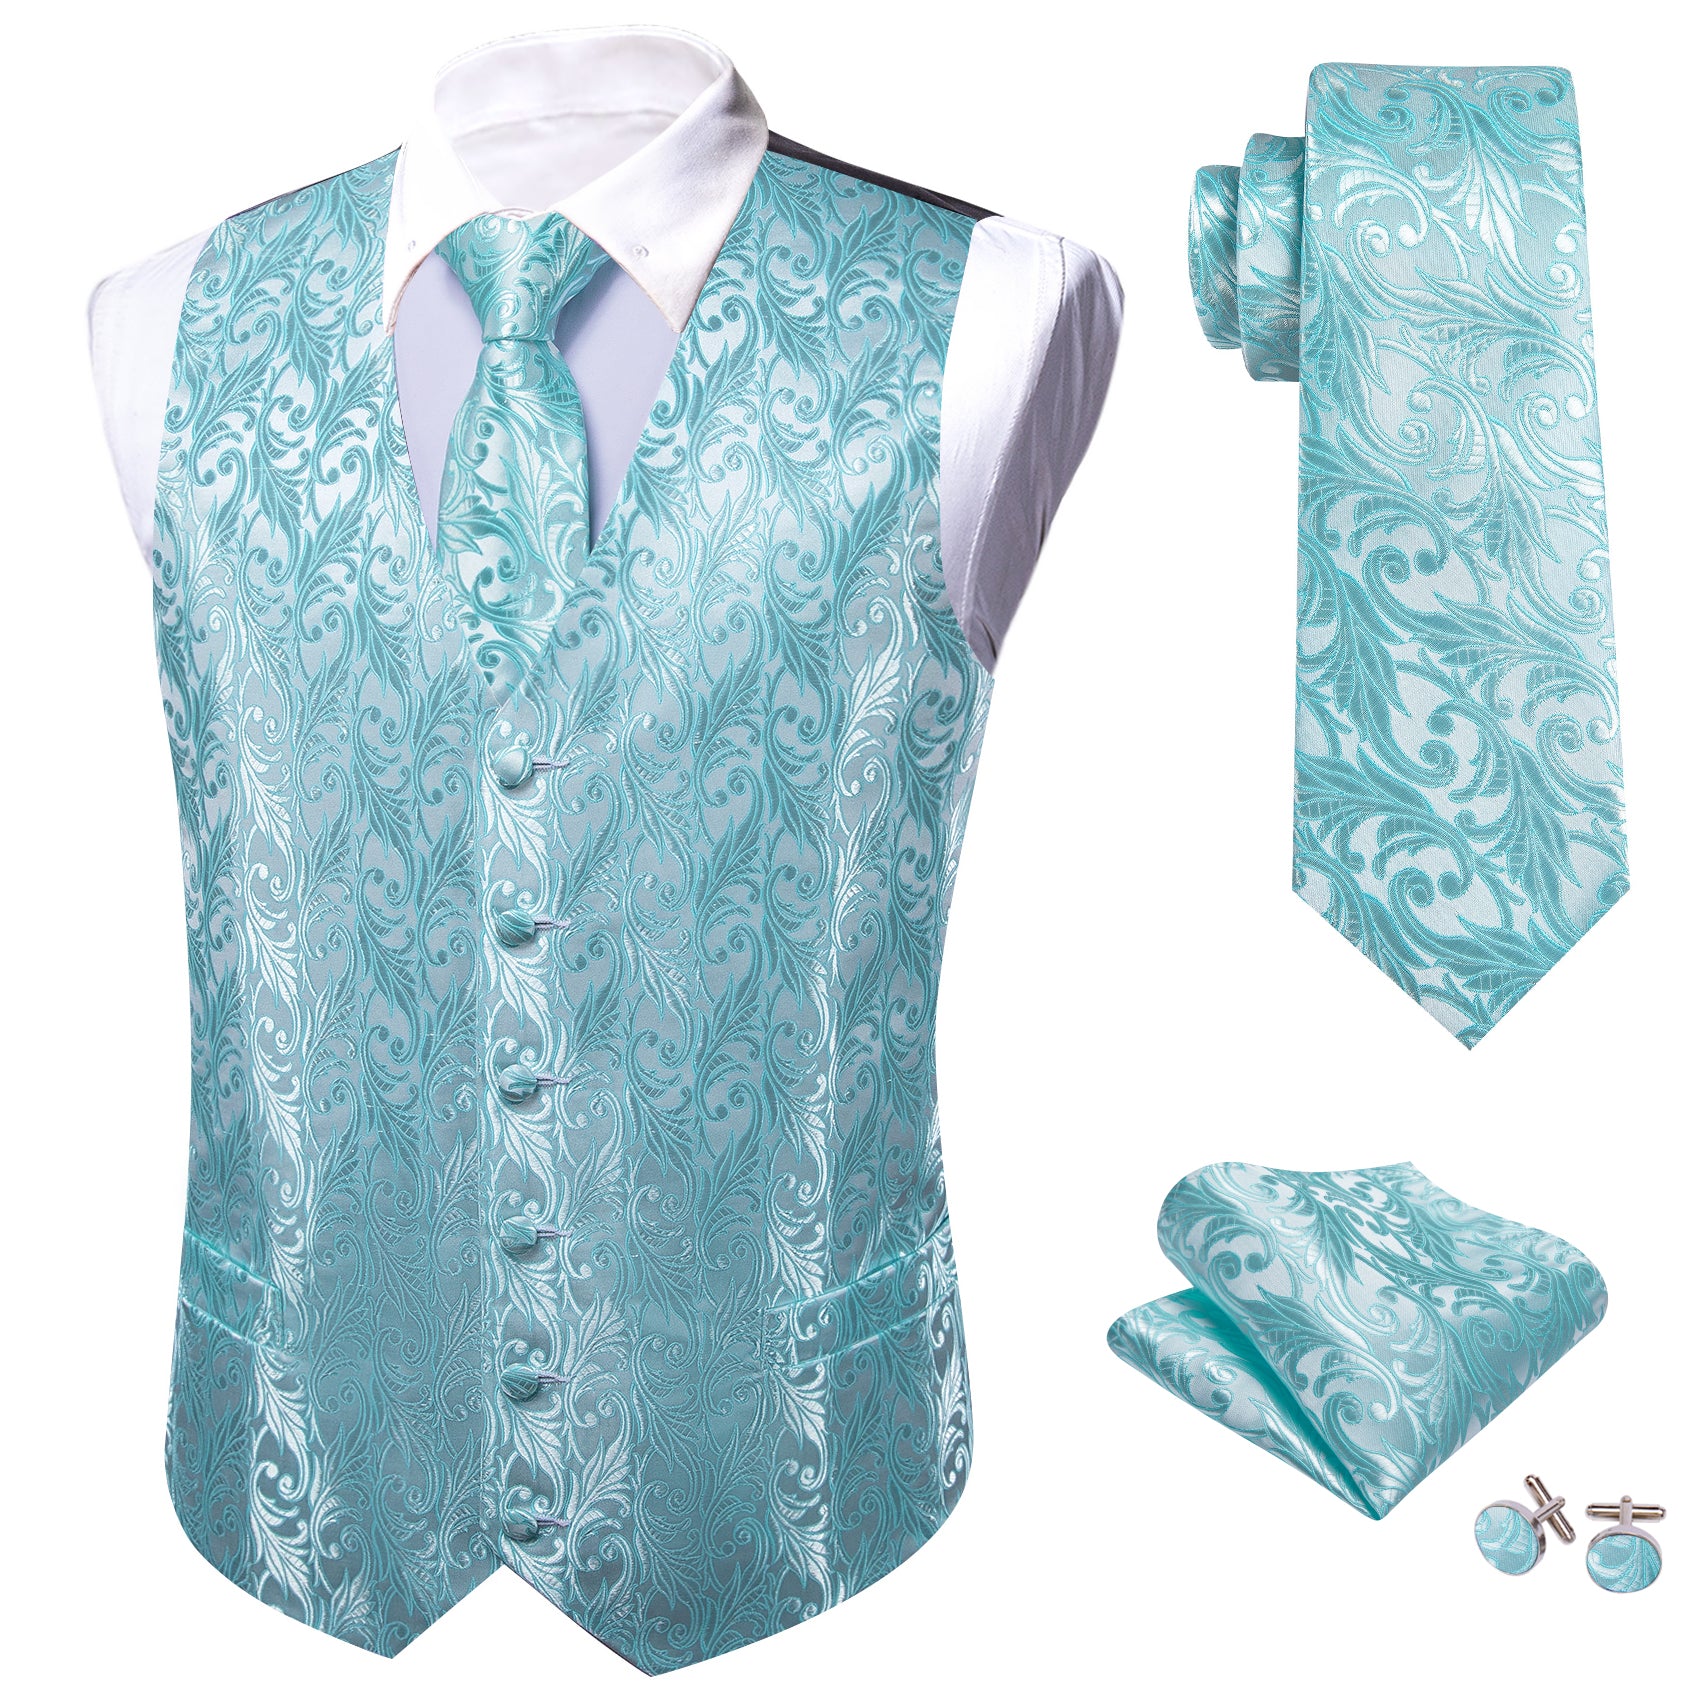 Barry.wang Men's Vest Aqua Floral Silk Vest Tie Hanky Cufflinks Set Fashion